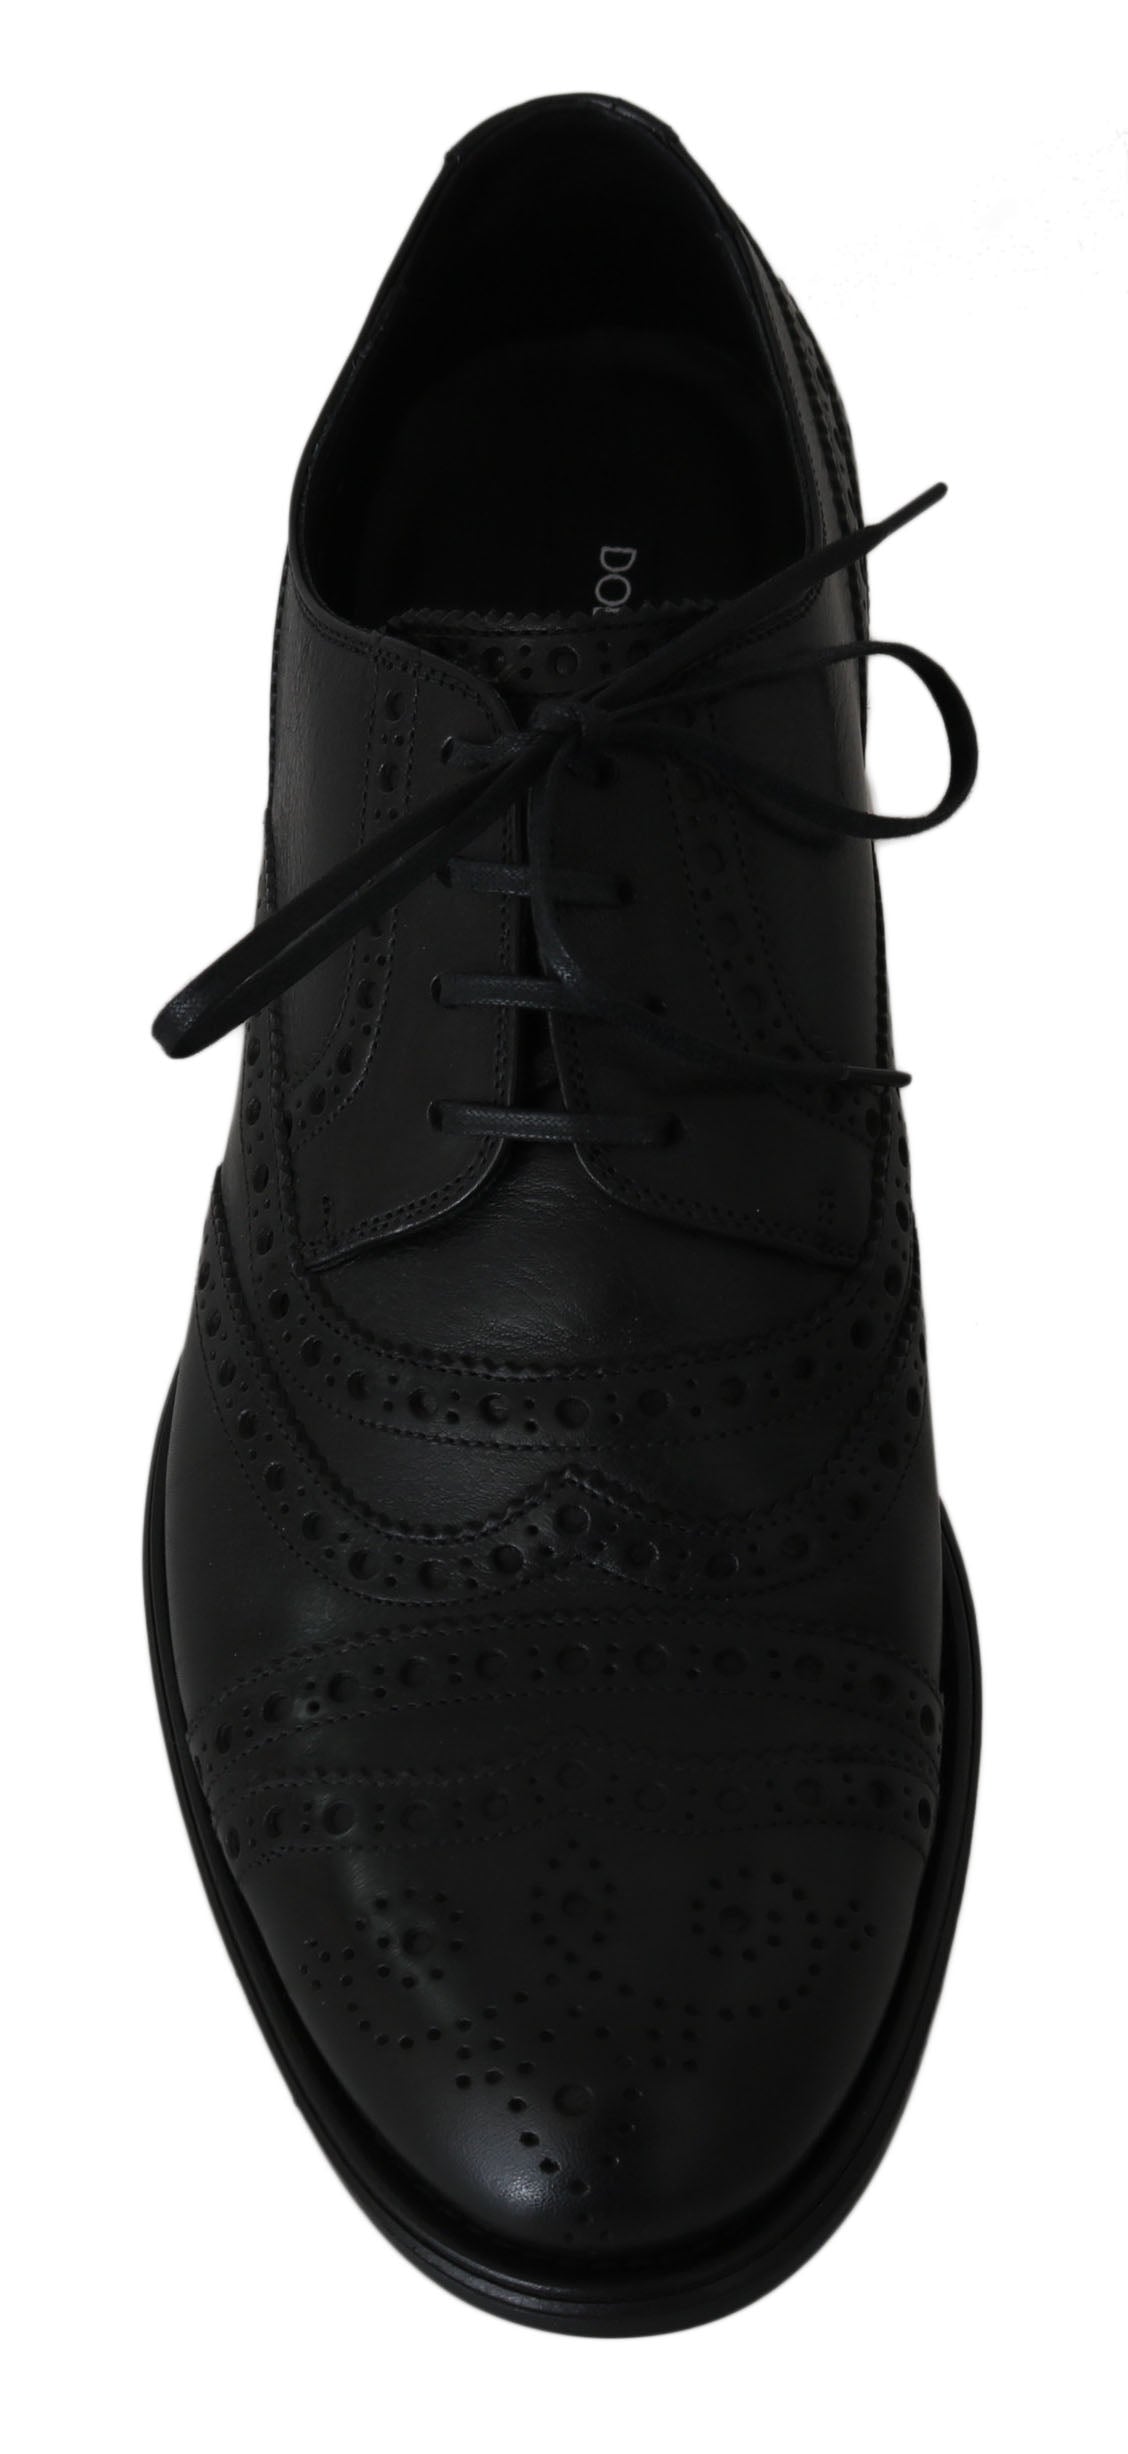 Dolce & Gabbana Black Leather Wingtip Oxford Dress Shoes